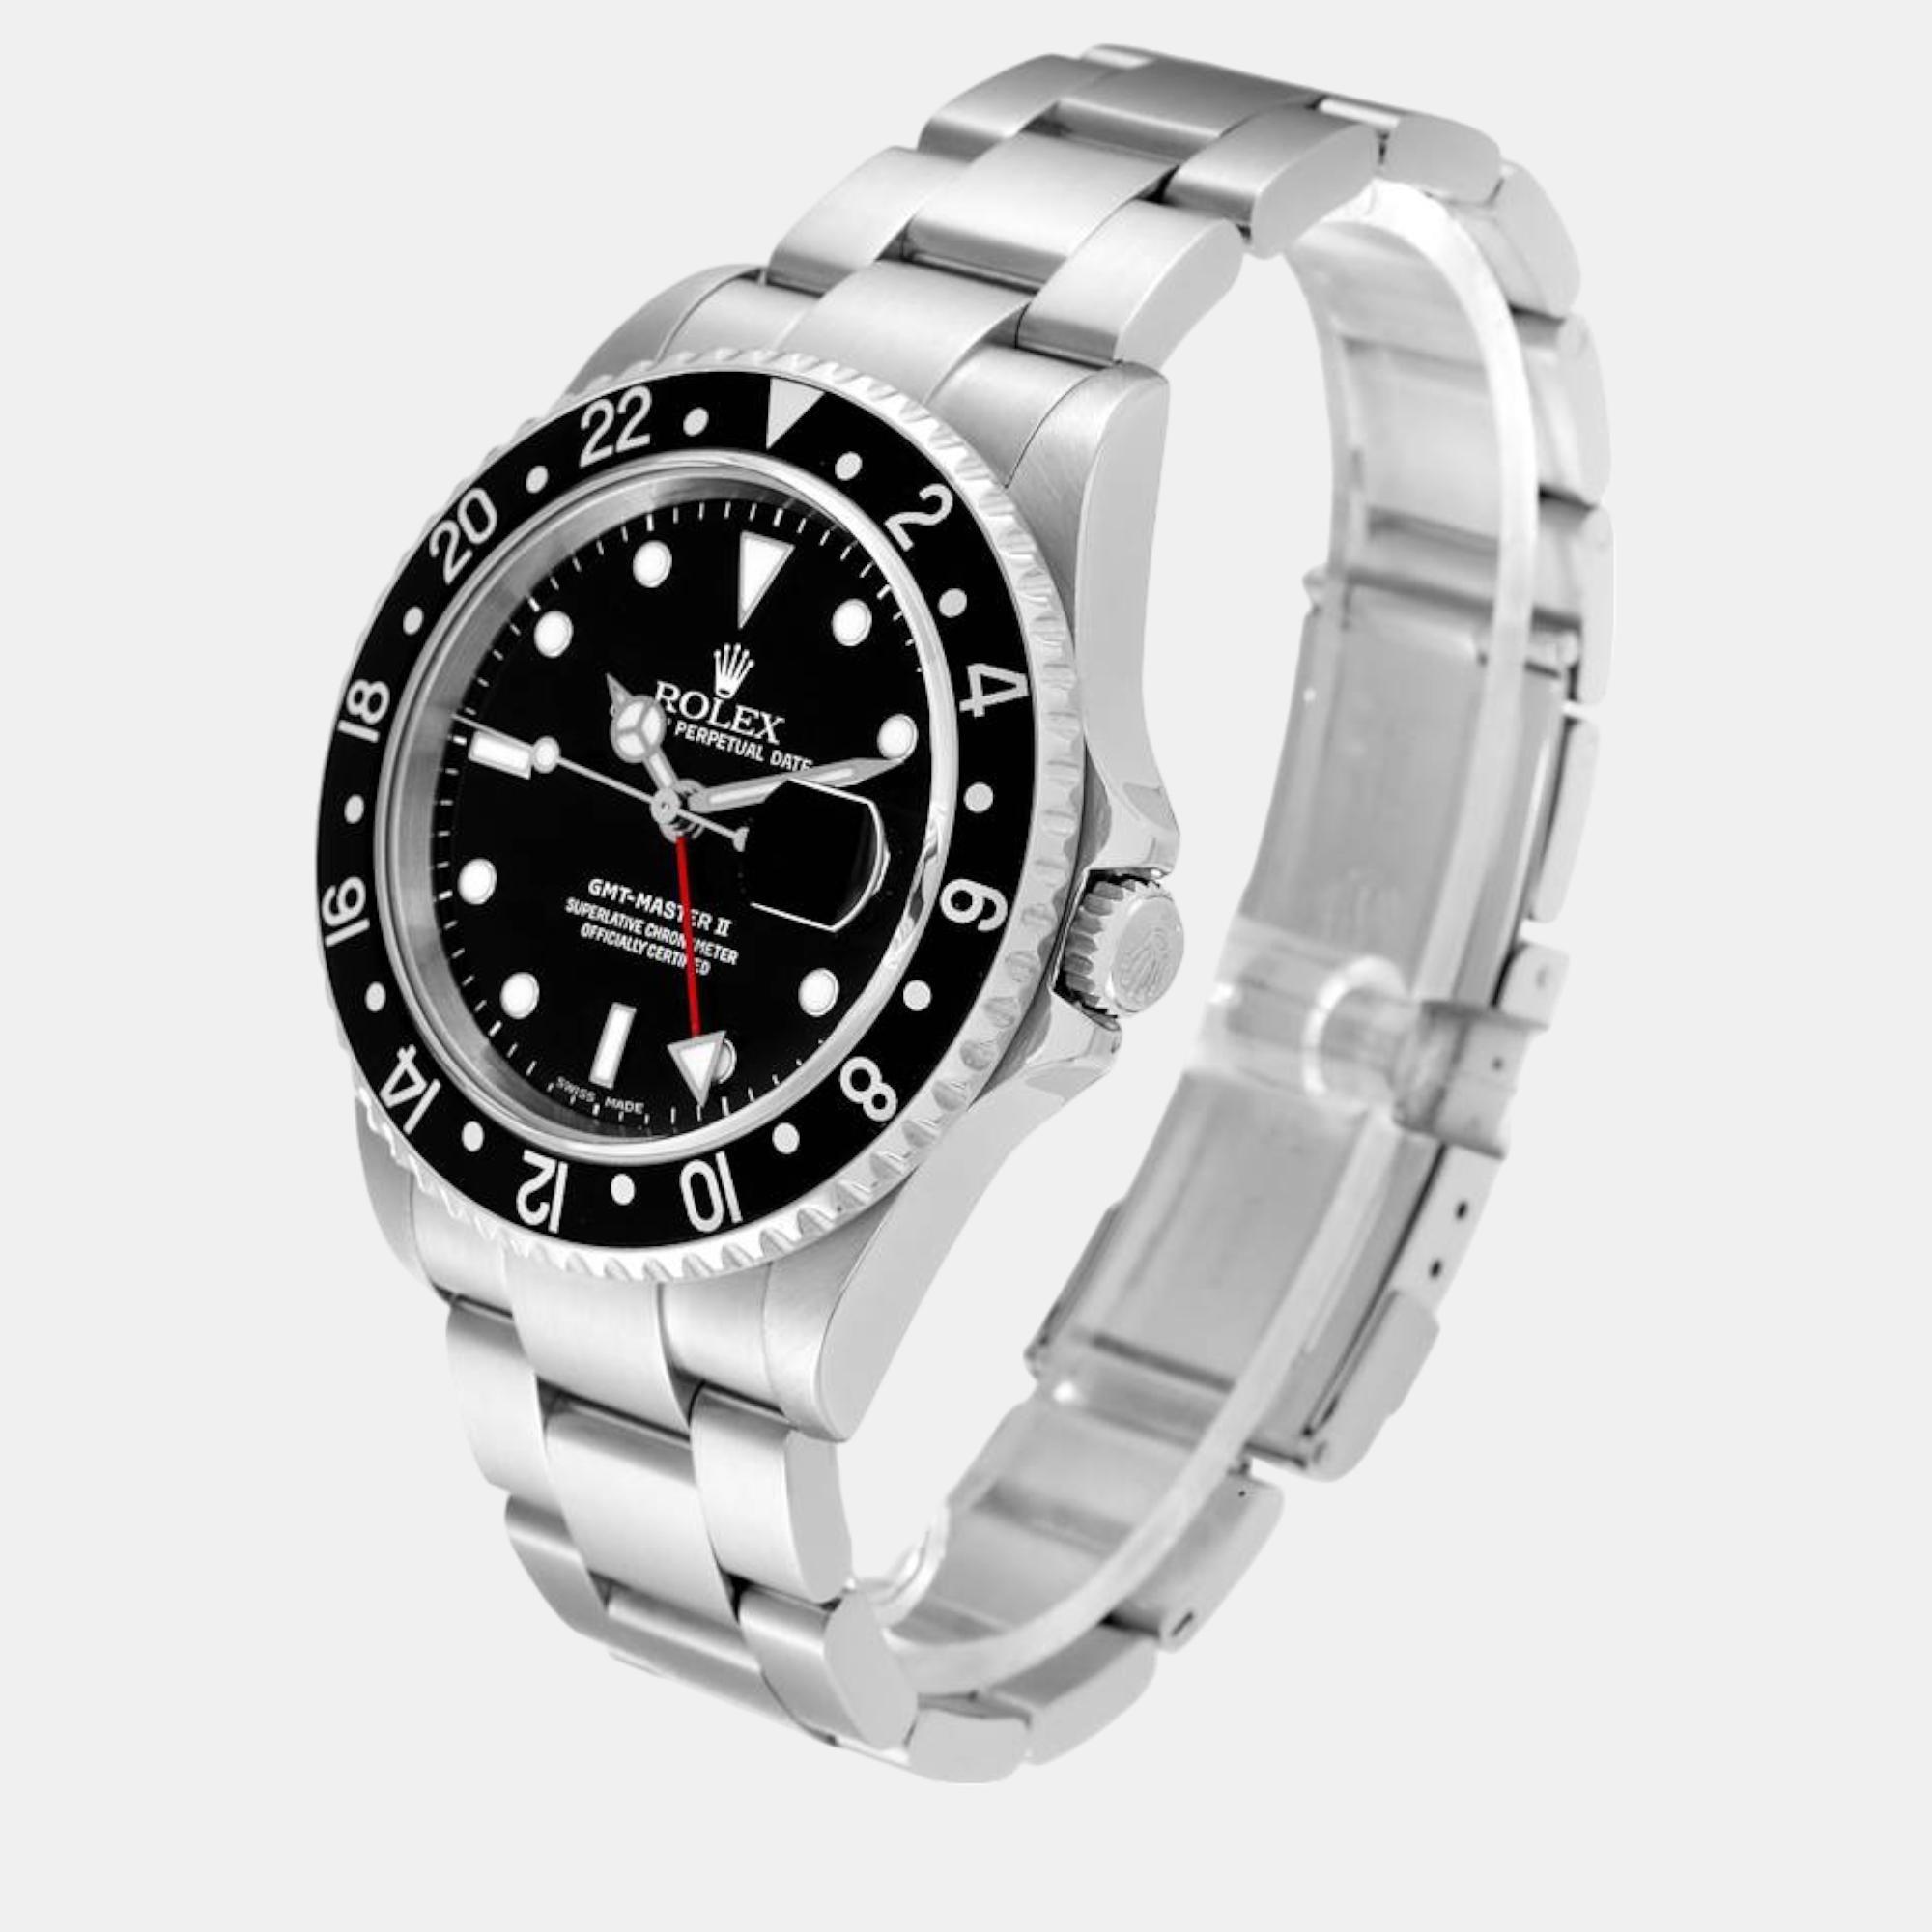 Rolex GMT Master II Black Bezel Dial Steel Mens Watch 16710